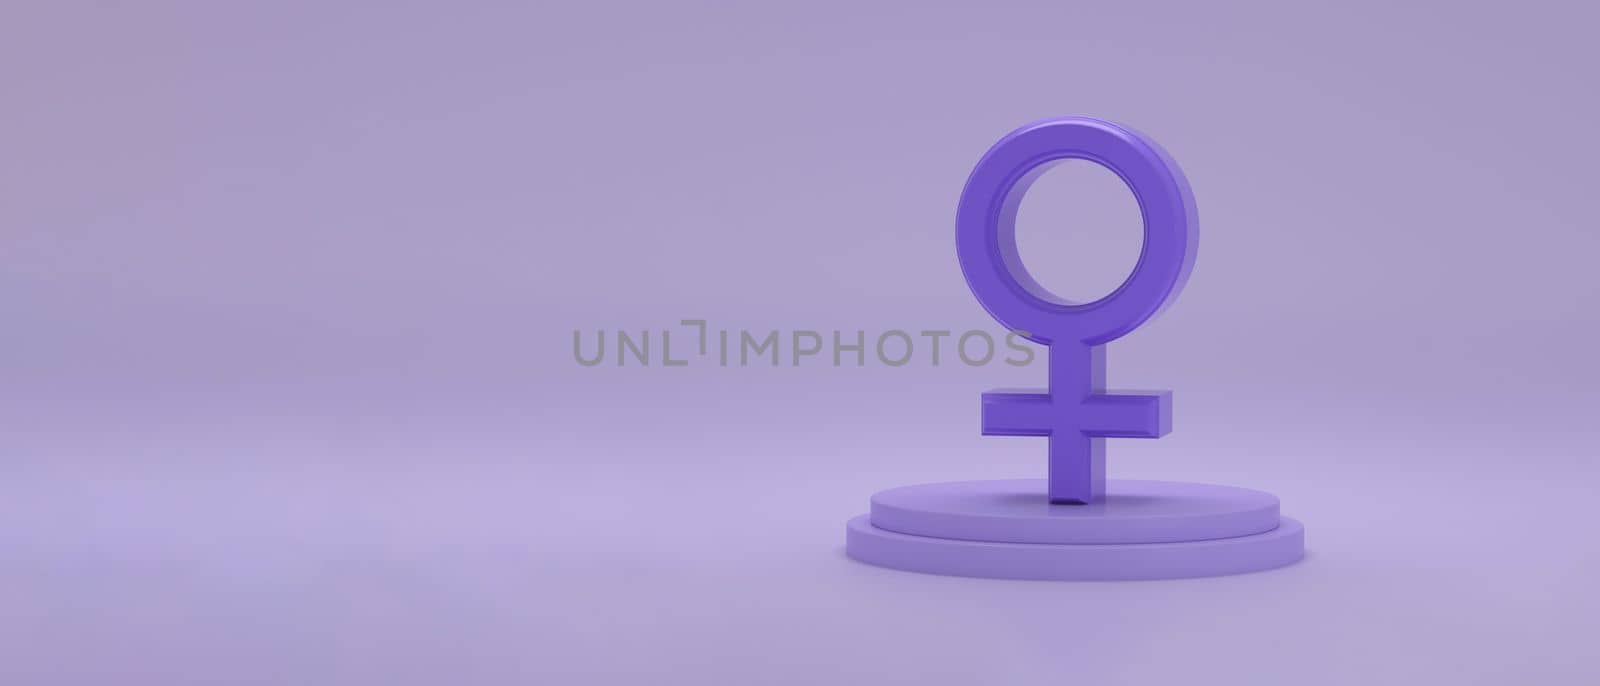 Venus or Female gender symbols on a podium on panoramic purple background. 3D rendering.